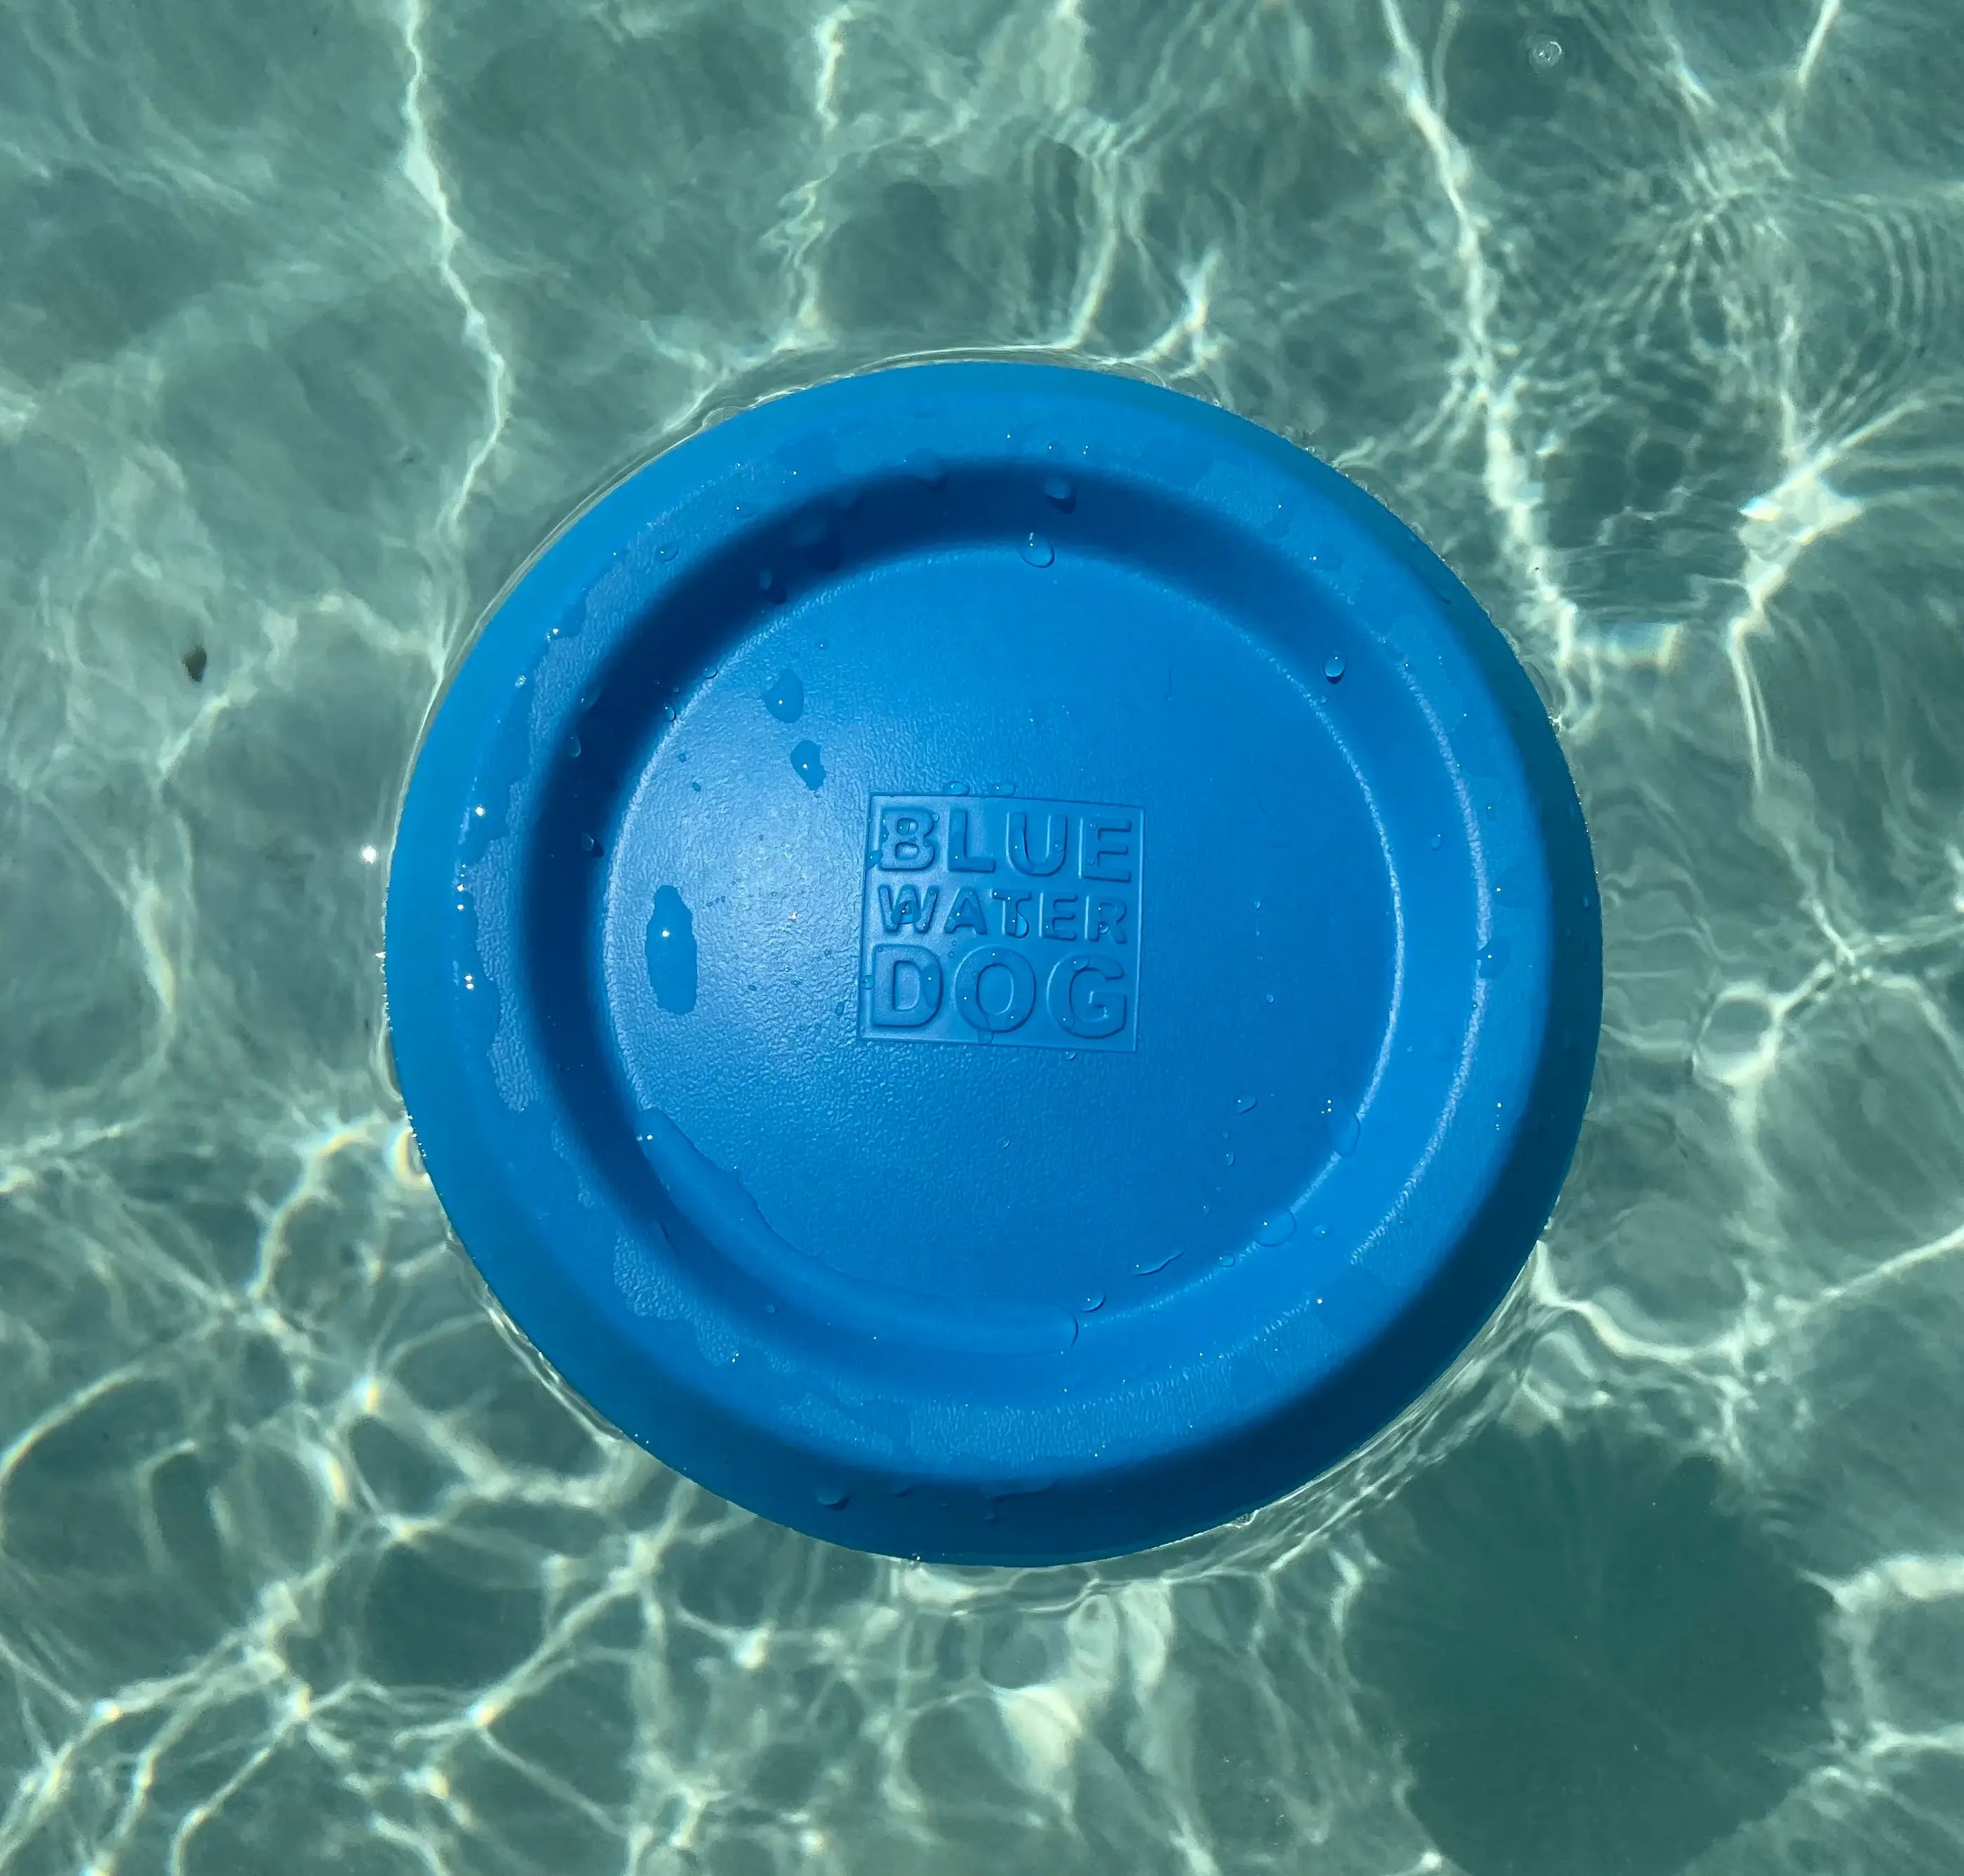 Blue dog frisbee floating in light blue water.